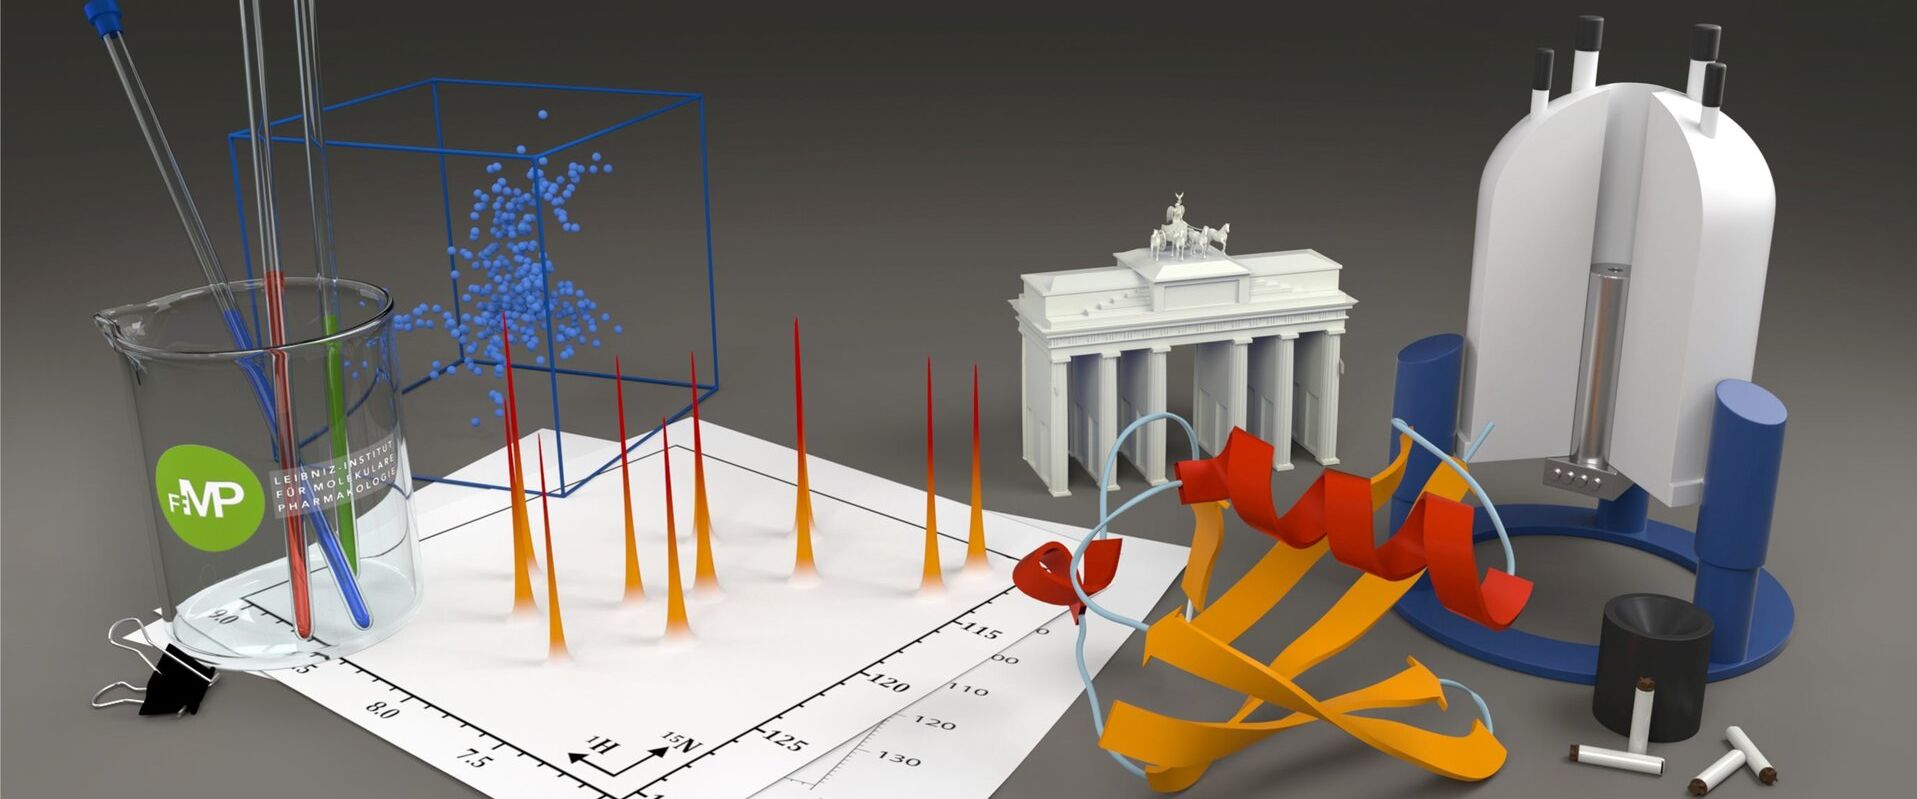 Becherglas mit Röhrchen, 3D Strukturen, Brandenburger Tor, NMR Magnet